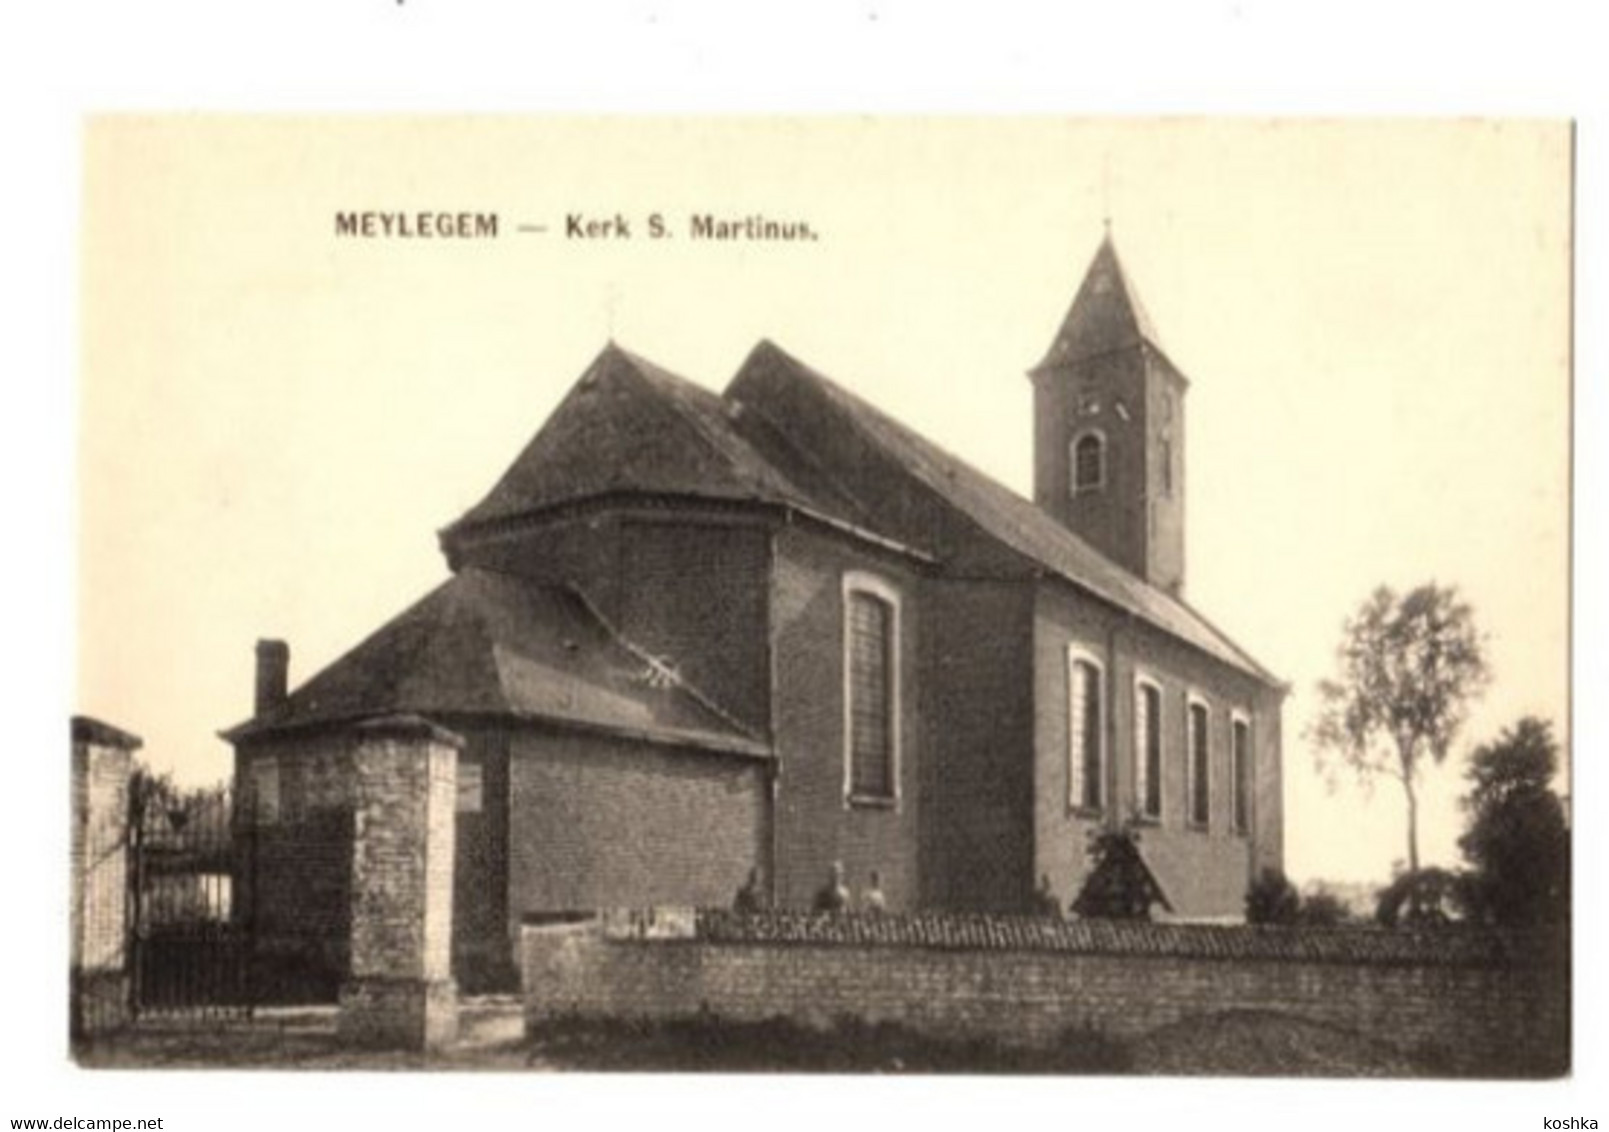 MEILEGEM - Meylegem - Kerk St Martinus - Niet Verzonden - Zwalm